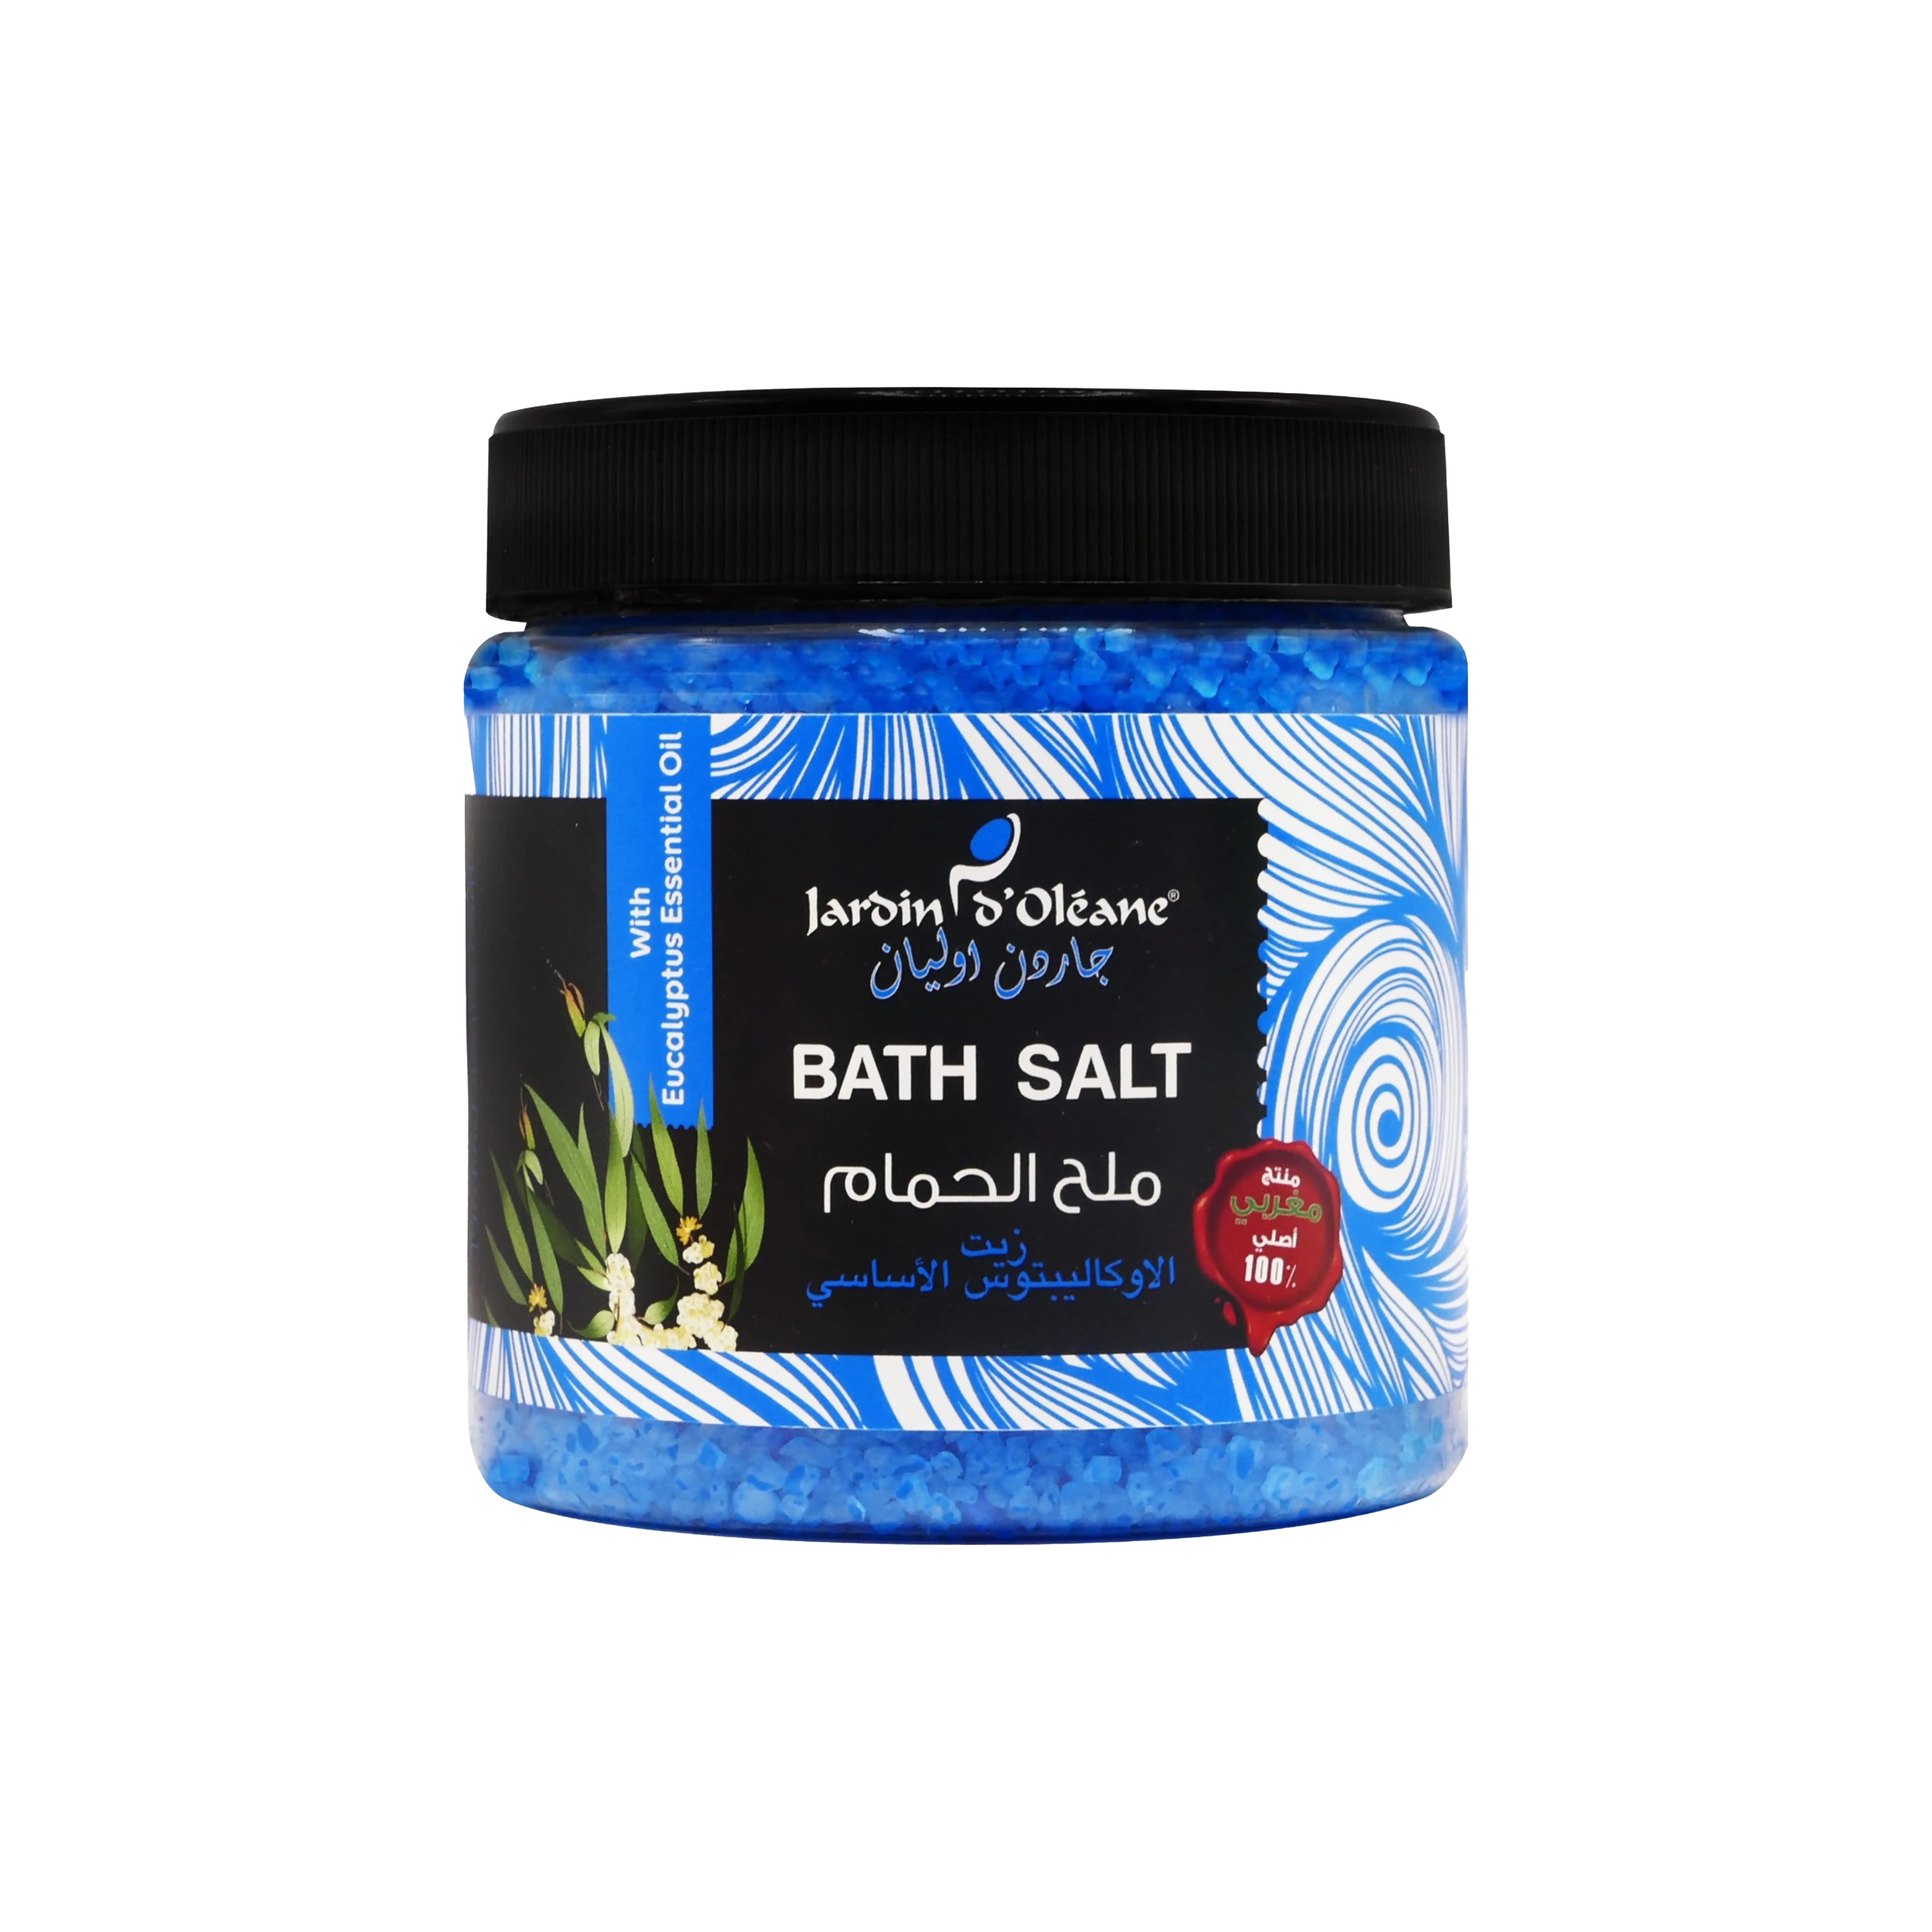 110-Jardin D’Oleane Bath Salt with Eucalyptus Essential Oil 600g